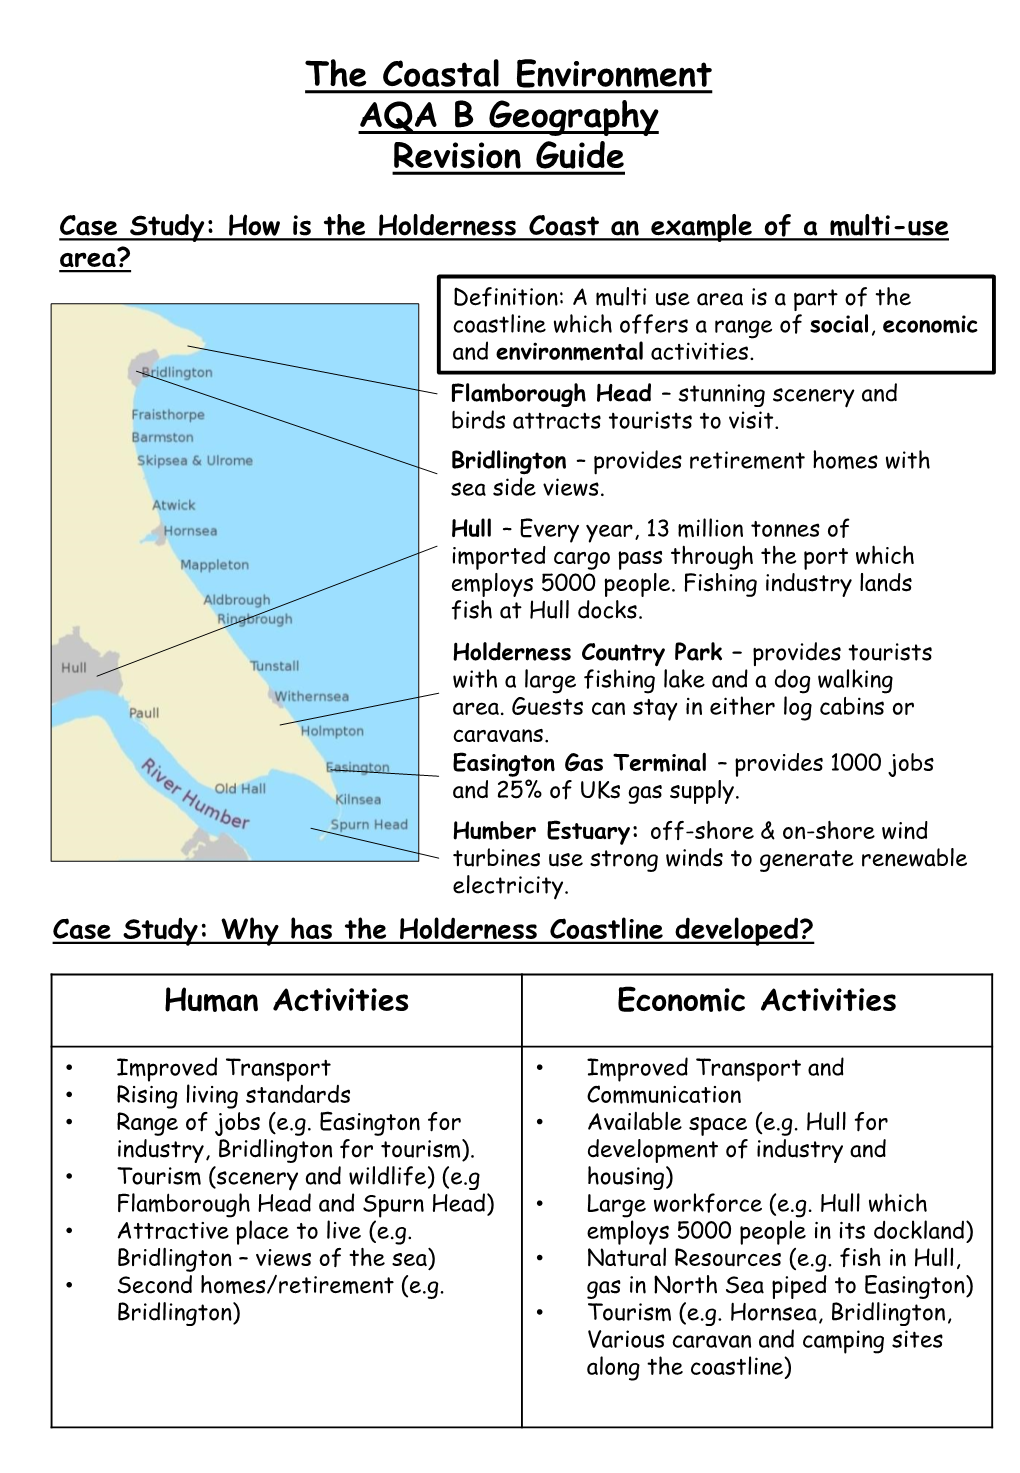 The Coastal Environment AQA B Geography Revision Guide